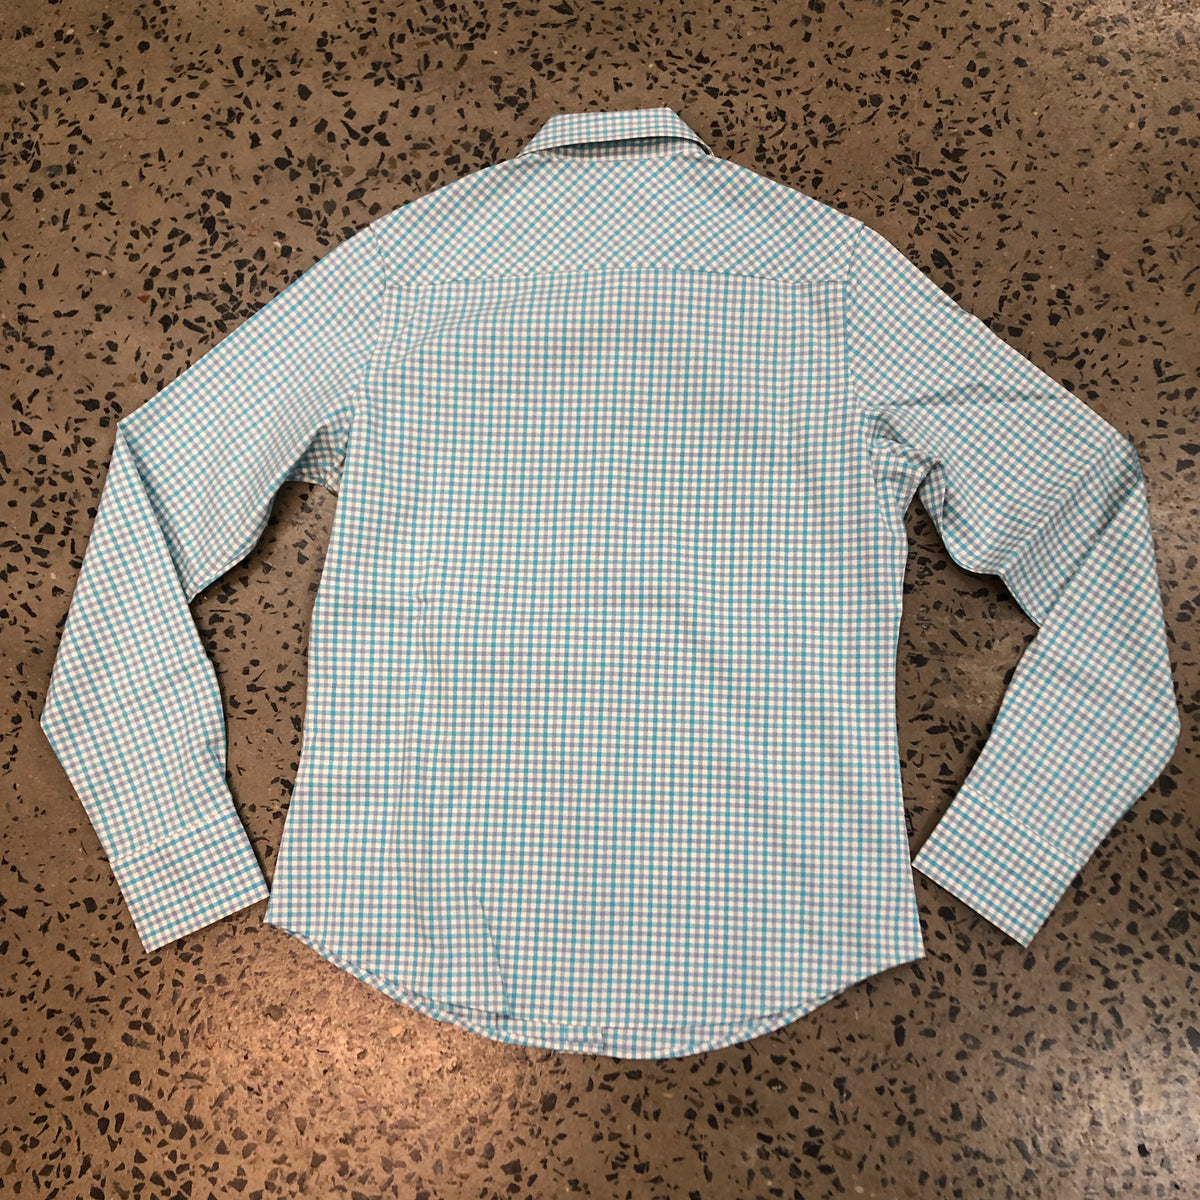 Kimes Ranch Long Sleeved Shirt - Tucco Mini Check Blue